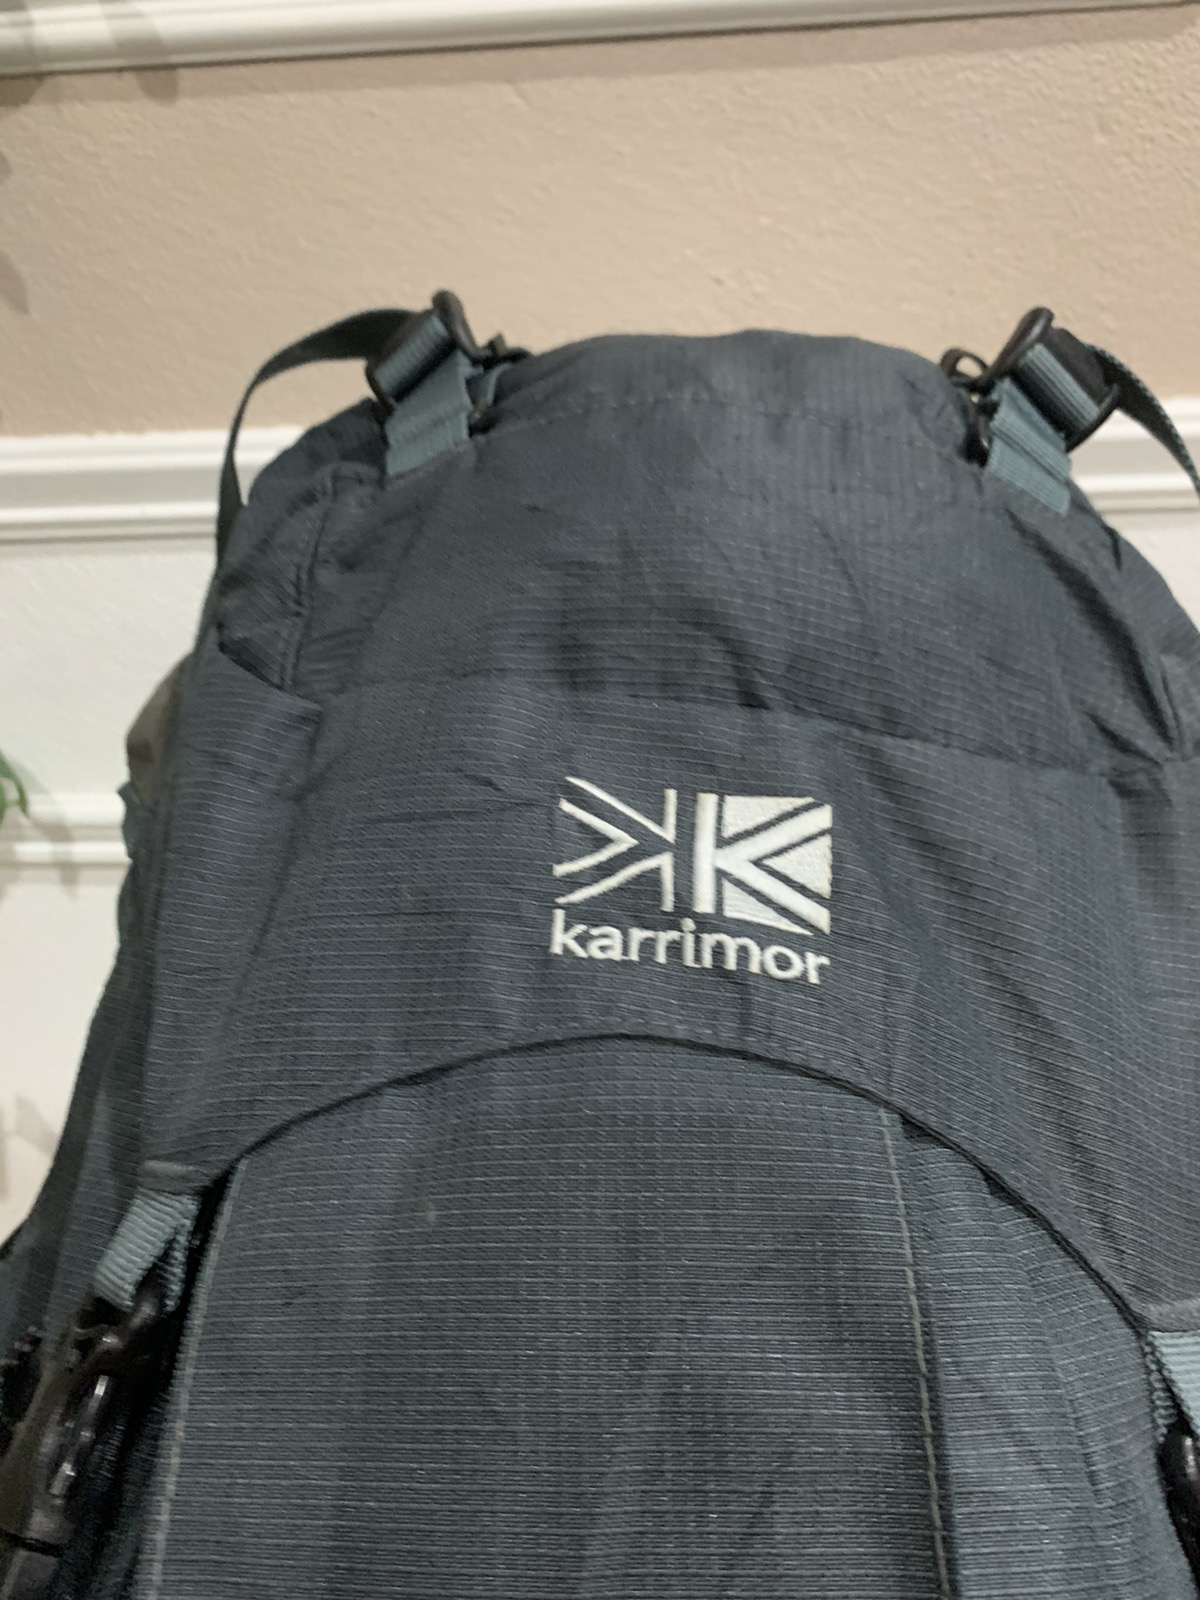 Karrimor - Karrimor hiking bag 30L - 9